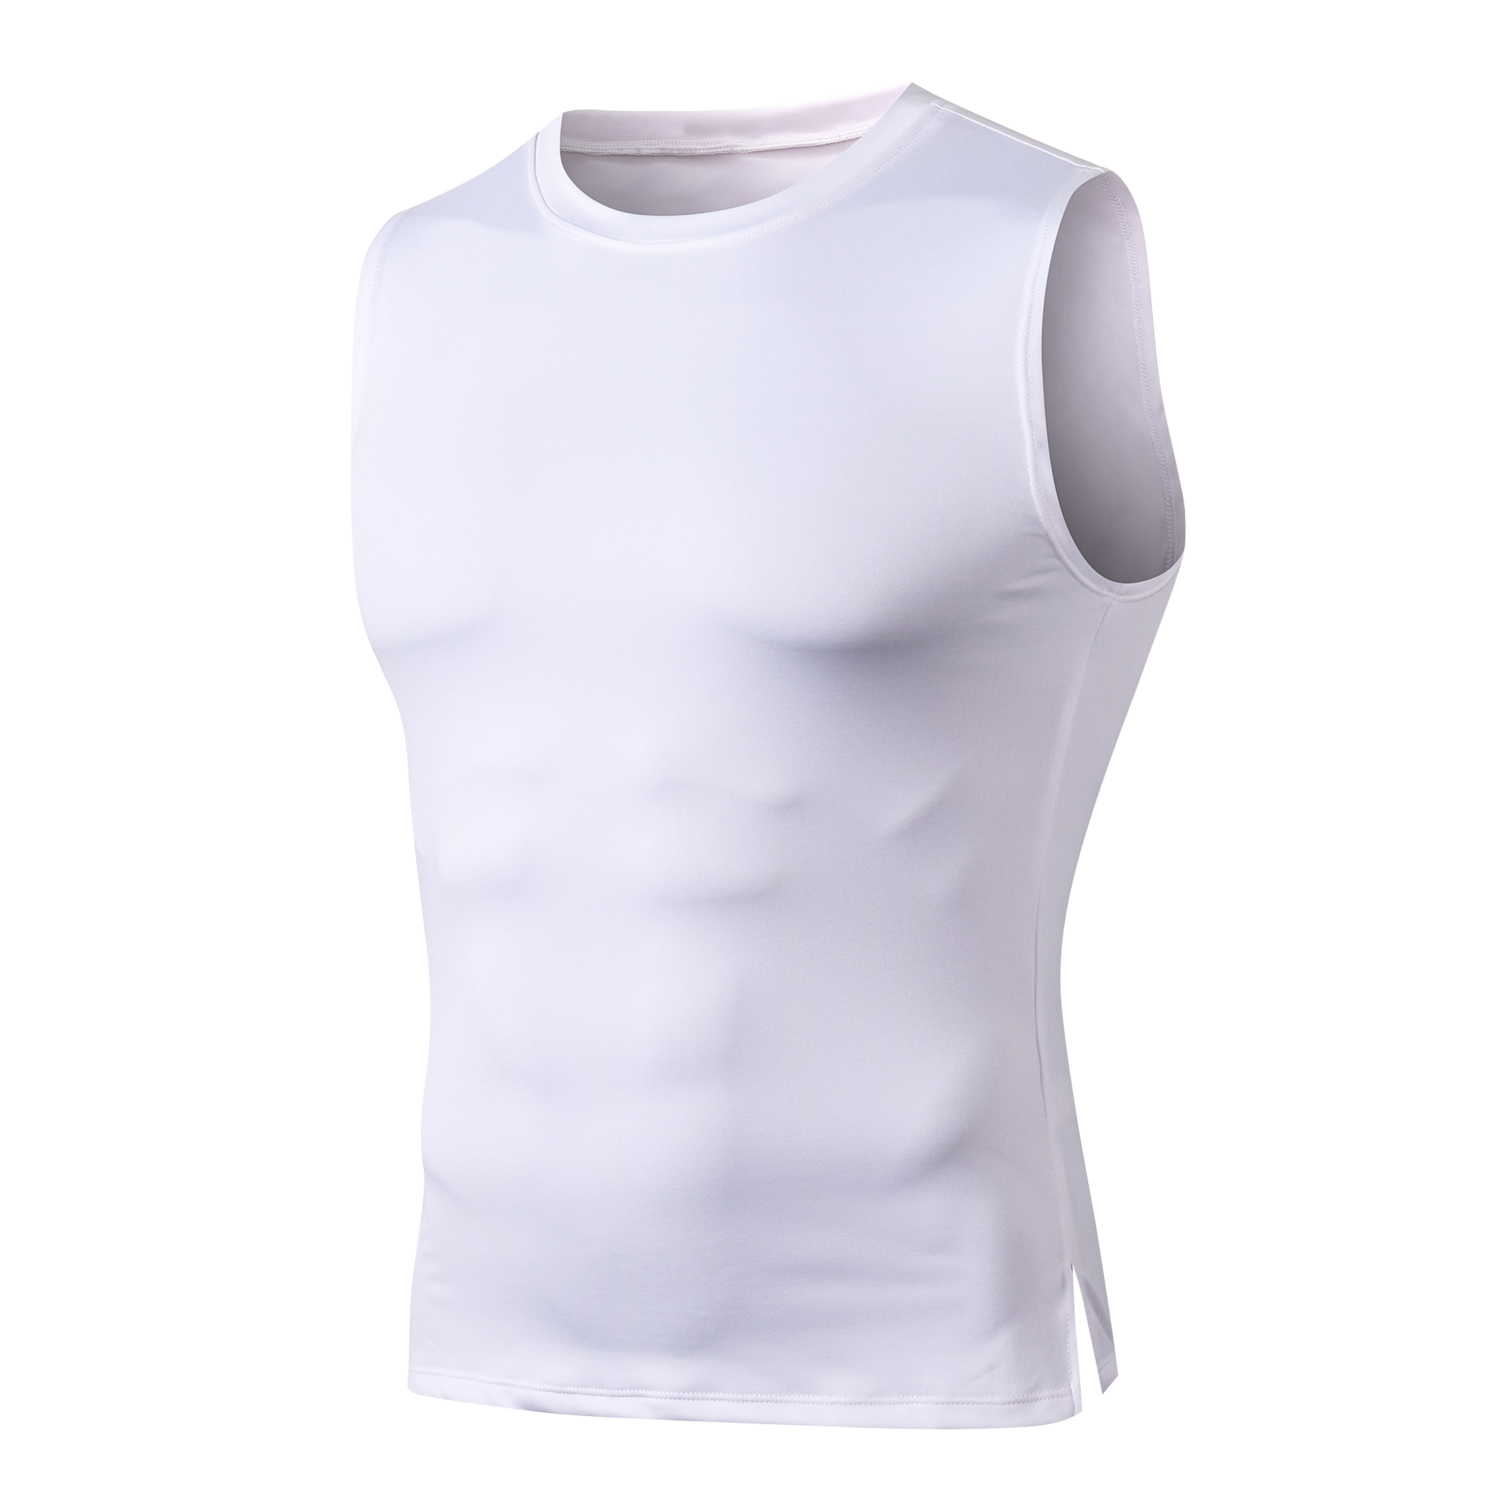 Chinjane Men's Skinny Tight White Compression Base Layer Sleeveless T-Shirt